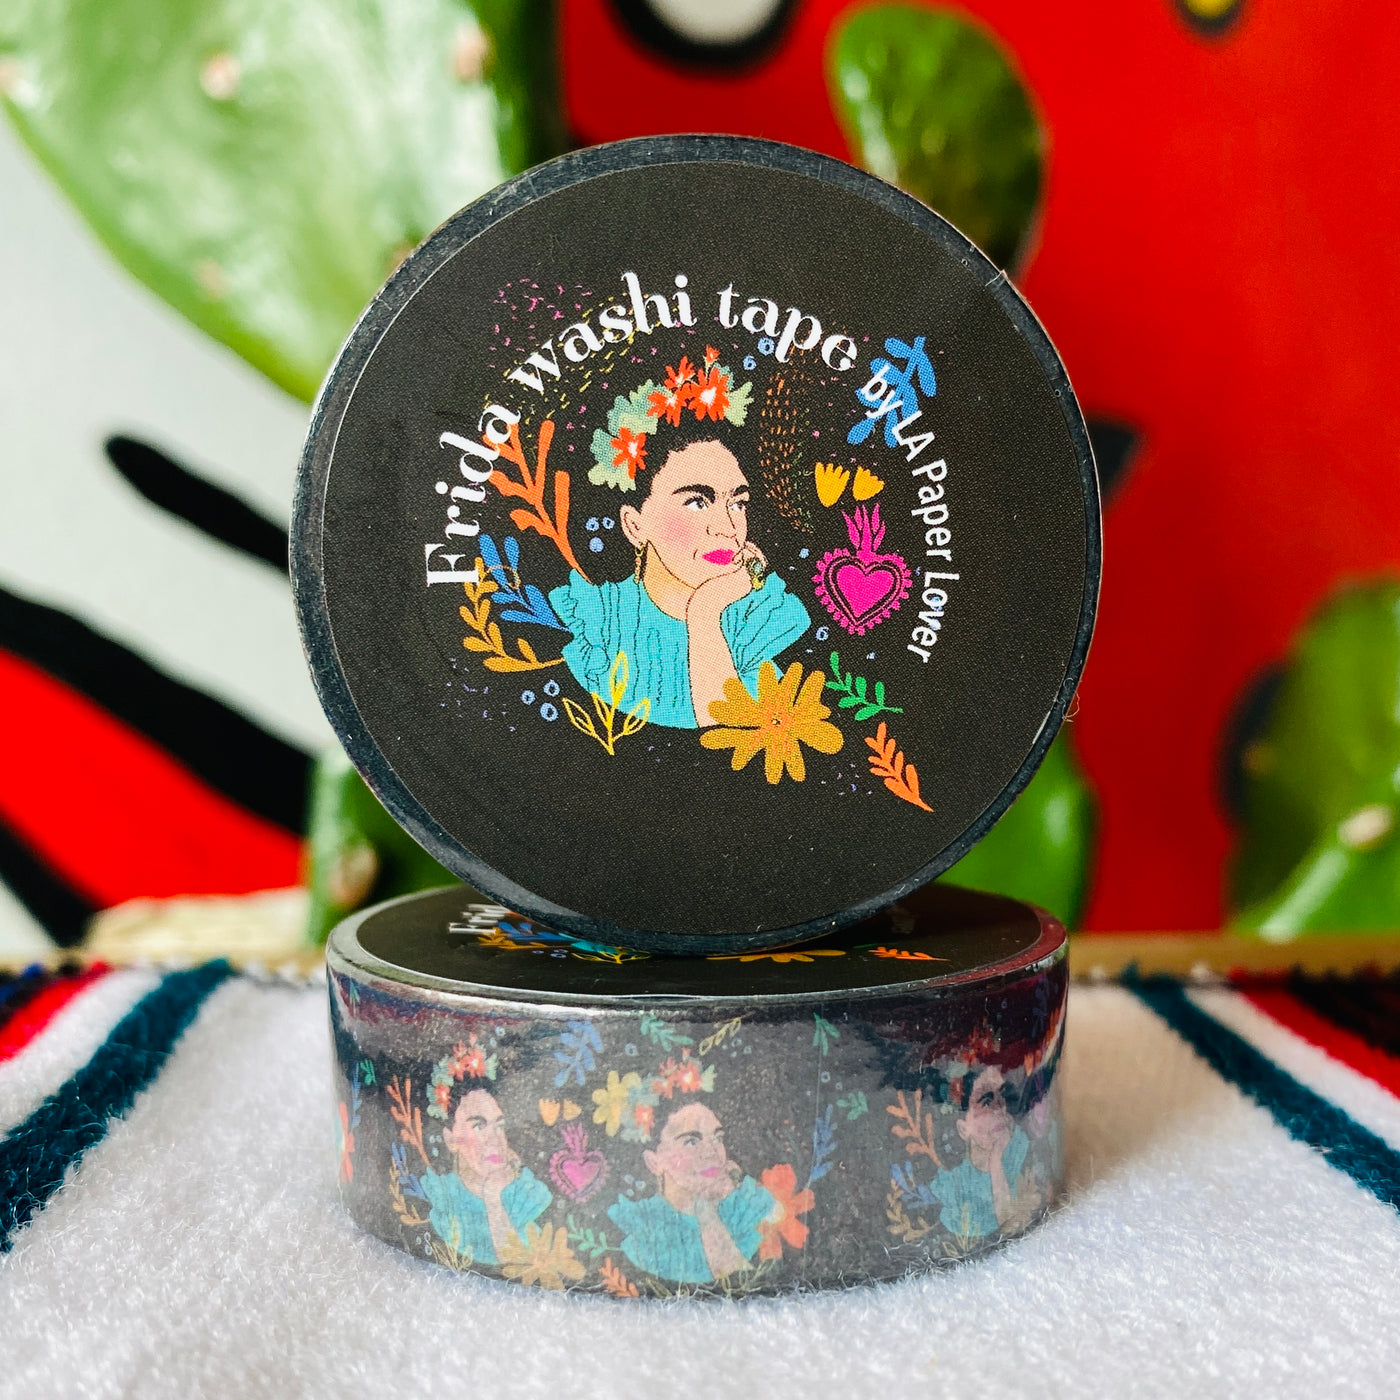 Close up of Frida Kahlo Washi tape in black.